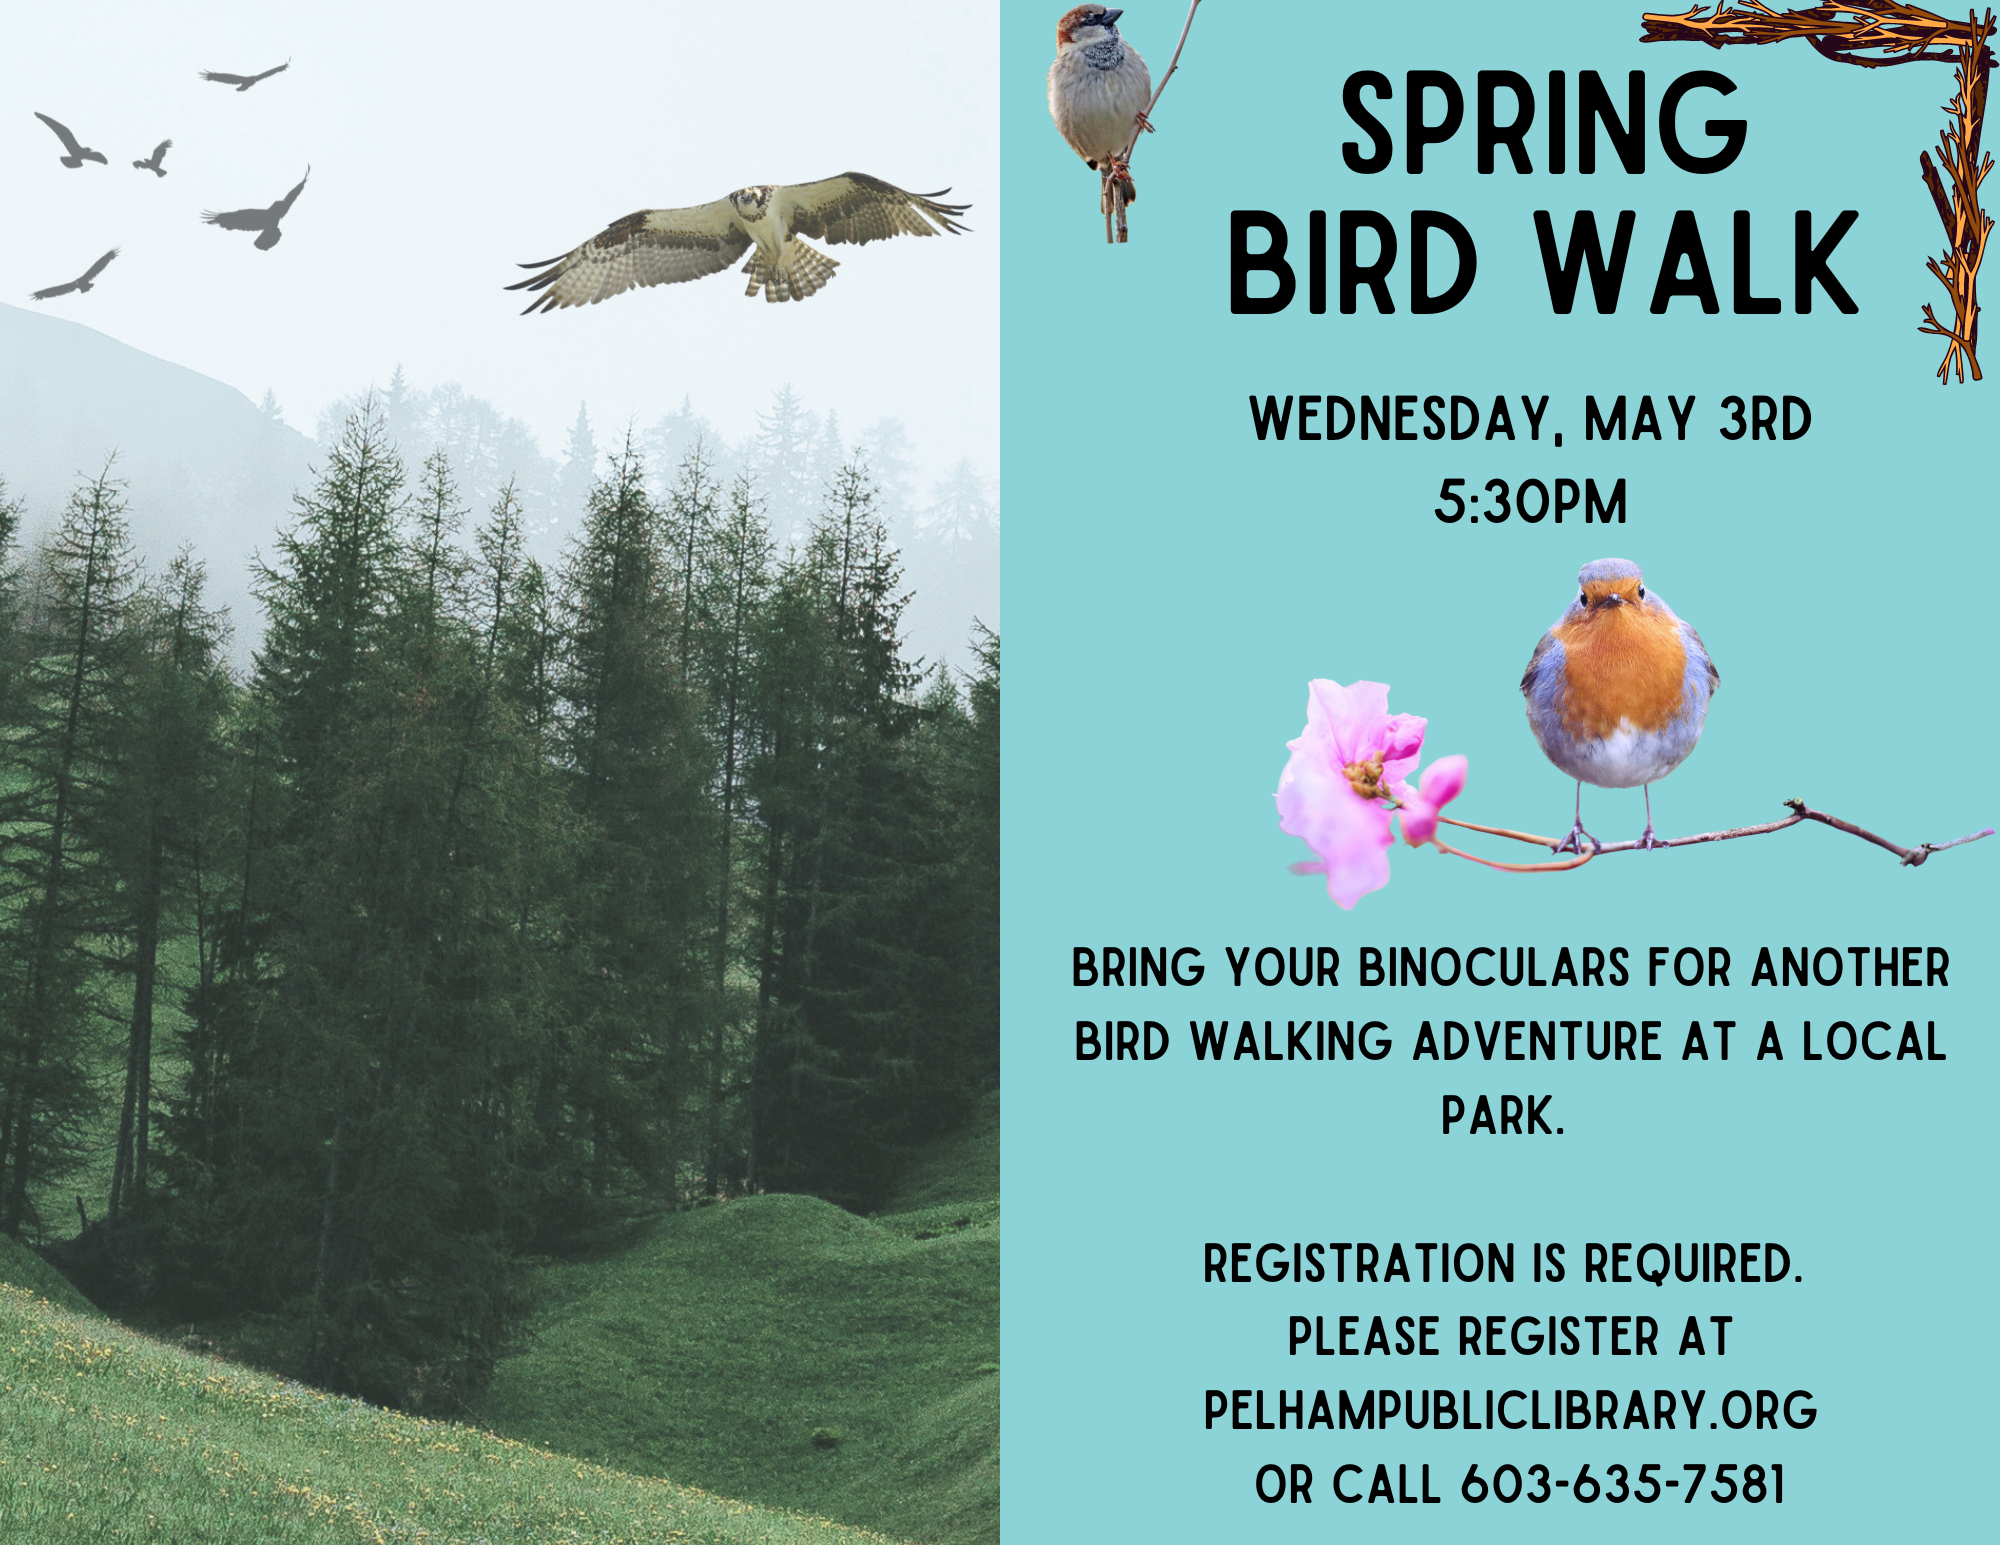 Spring Bird Walk, Wednesday, May 3rd 5:30pm